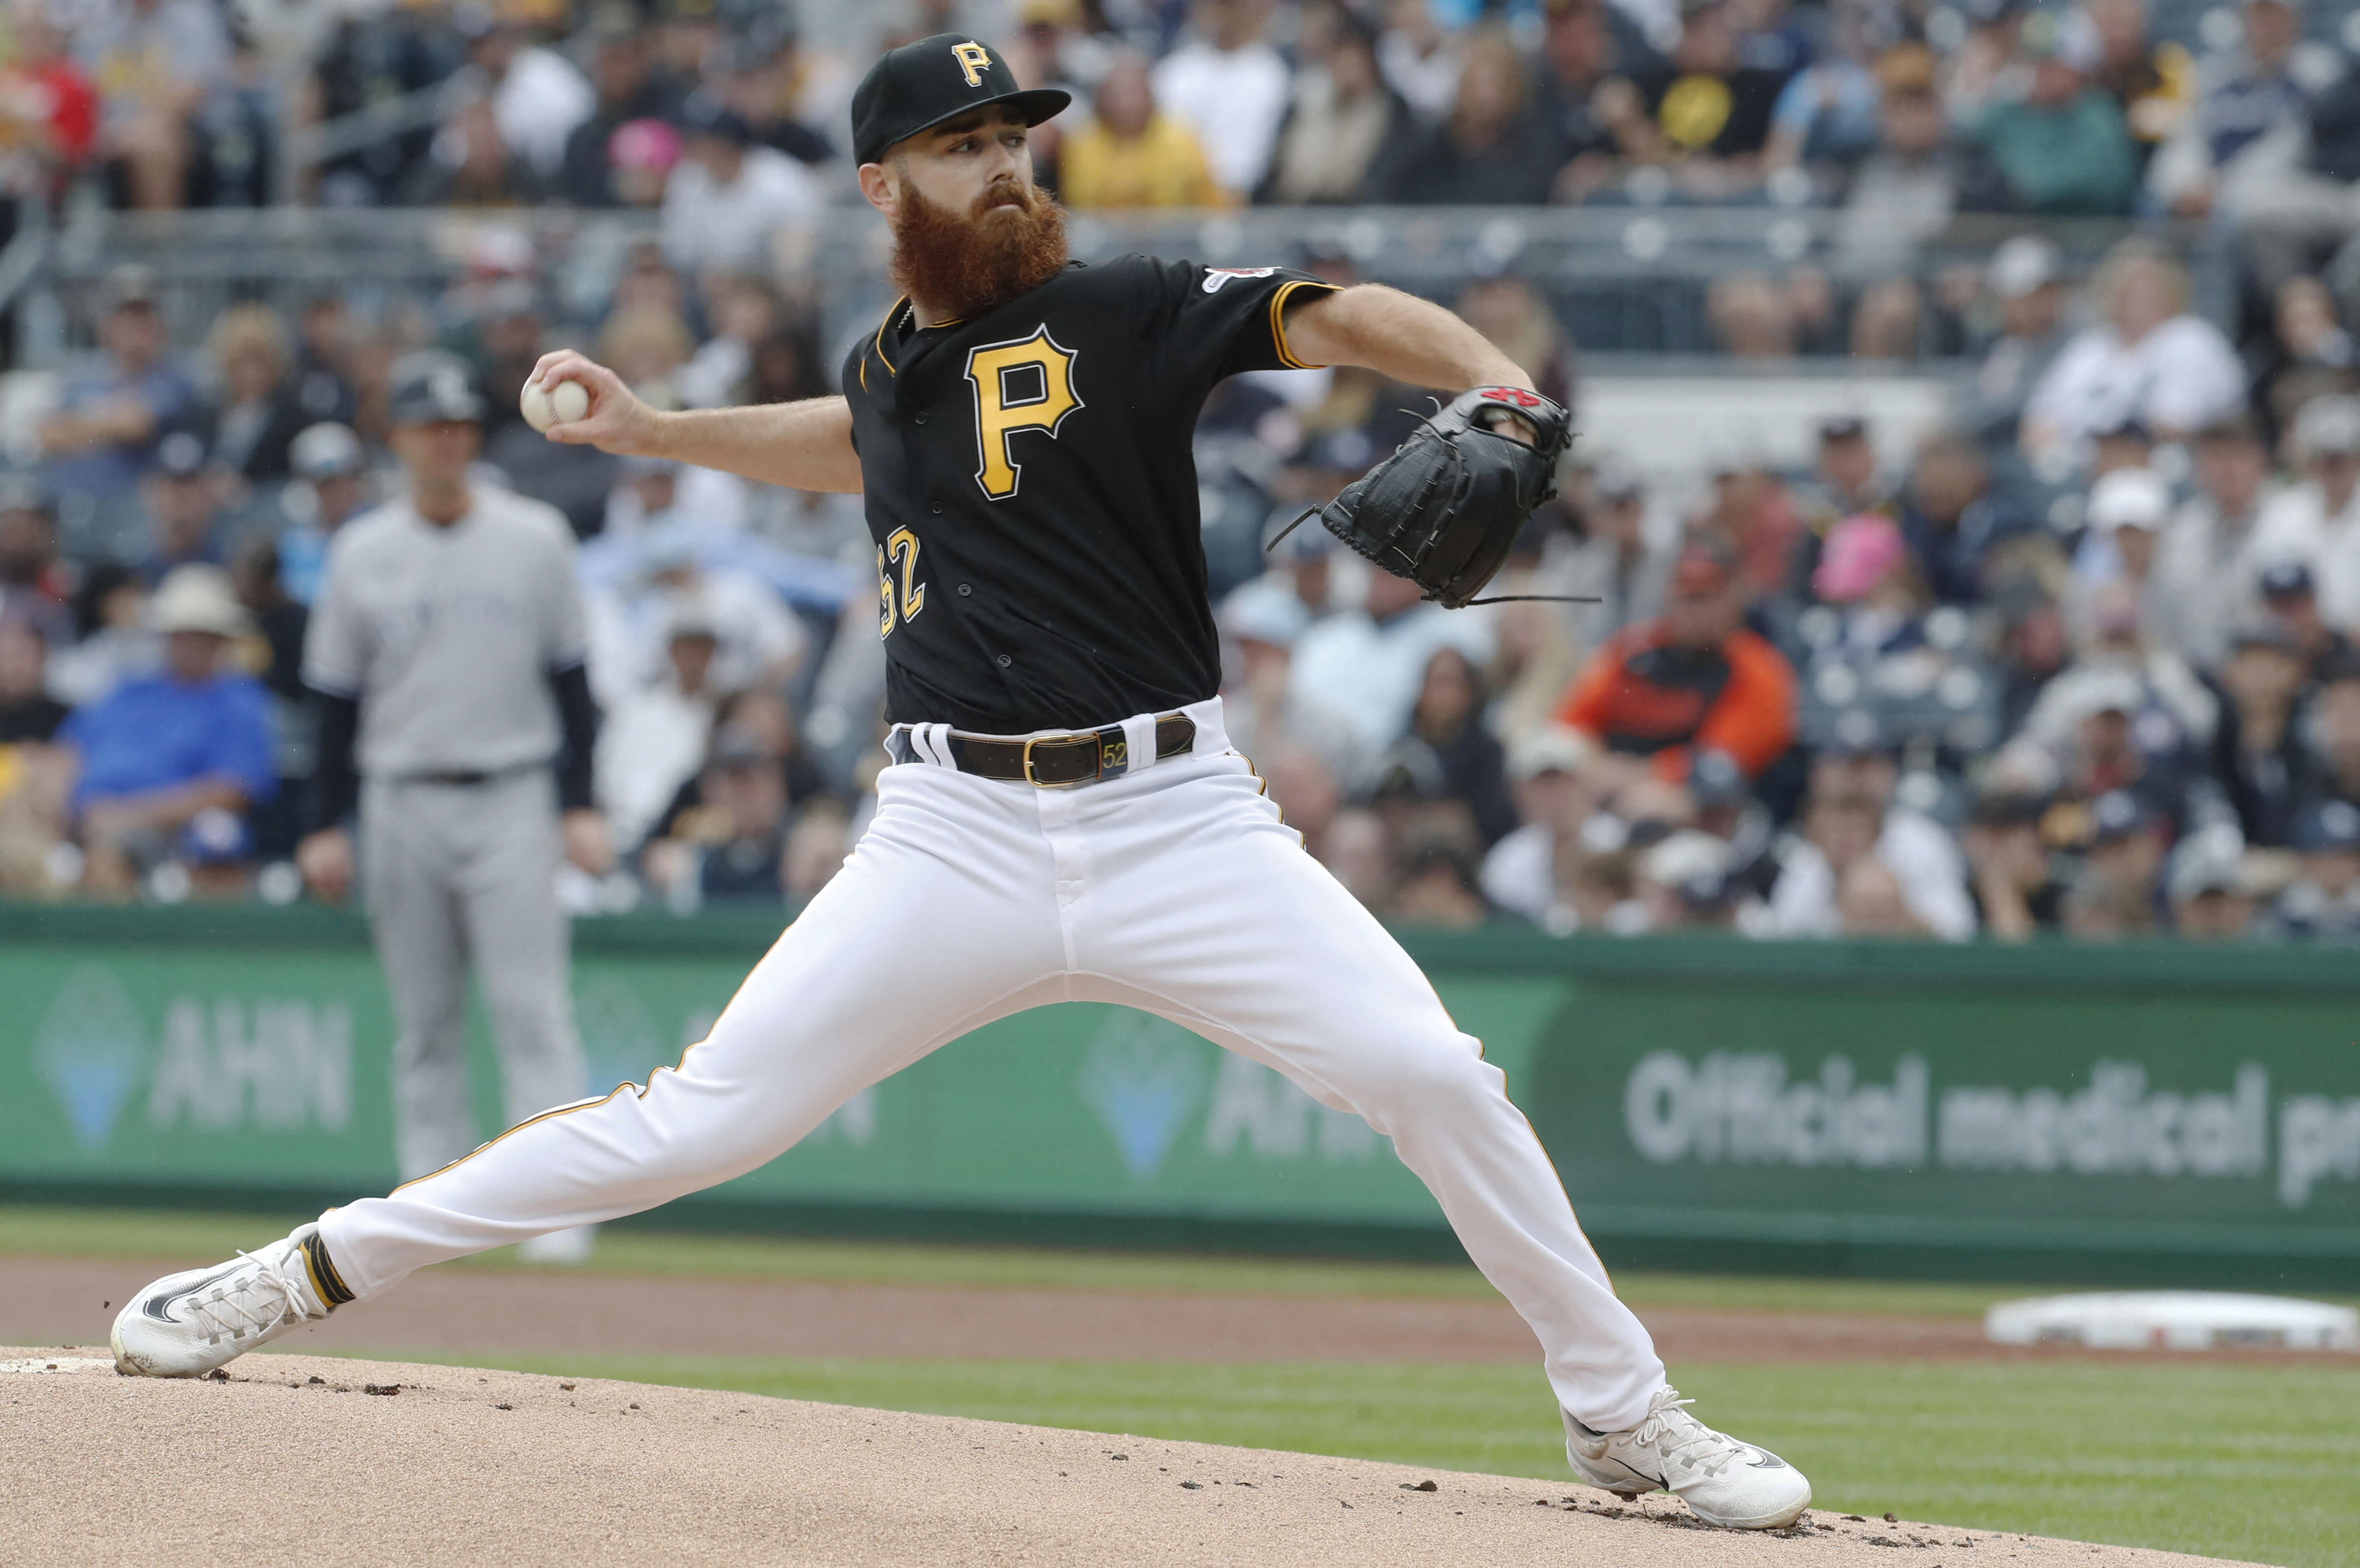 Pittsburgh Pirates: Debating More Playing Time for Miguel Andujar - D Dey -  Medium